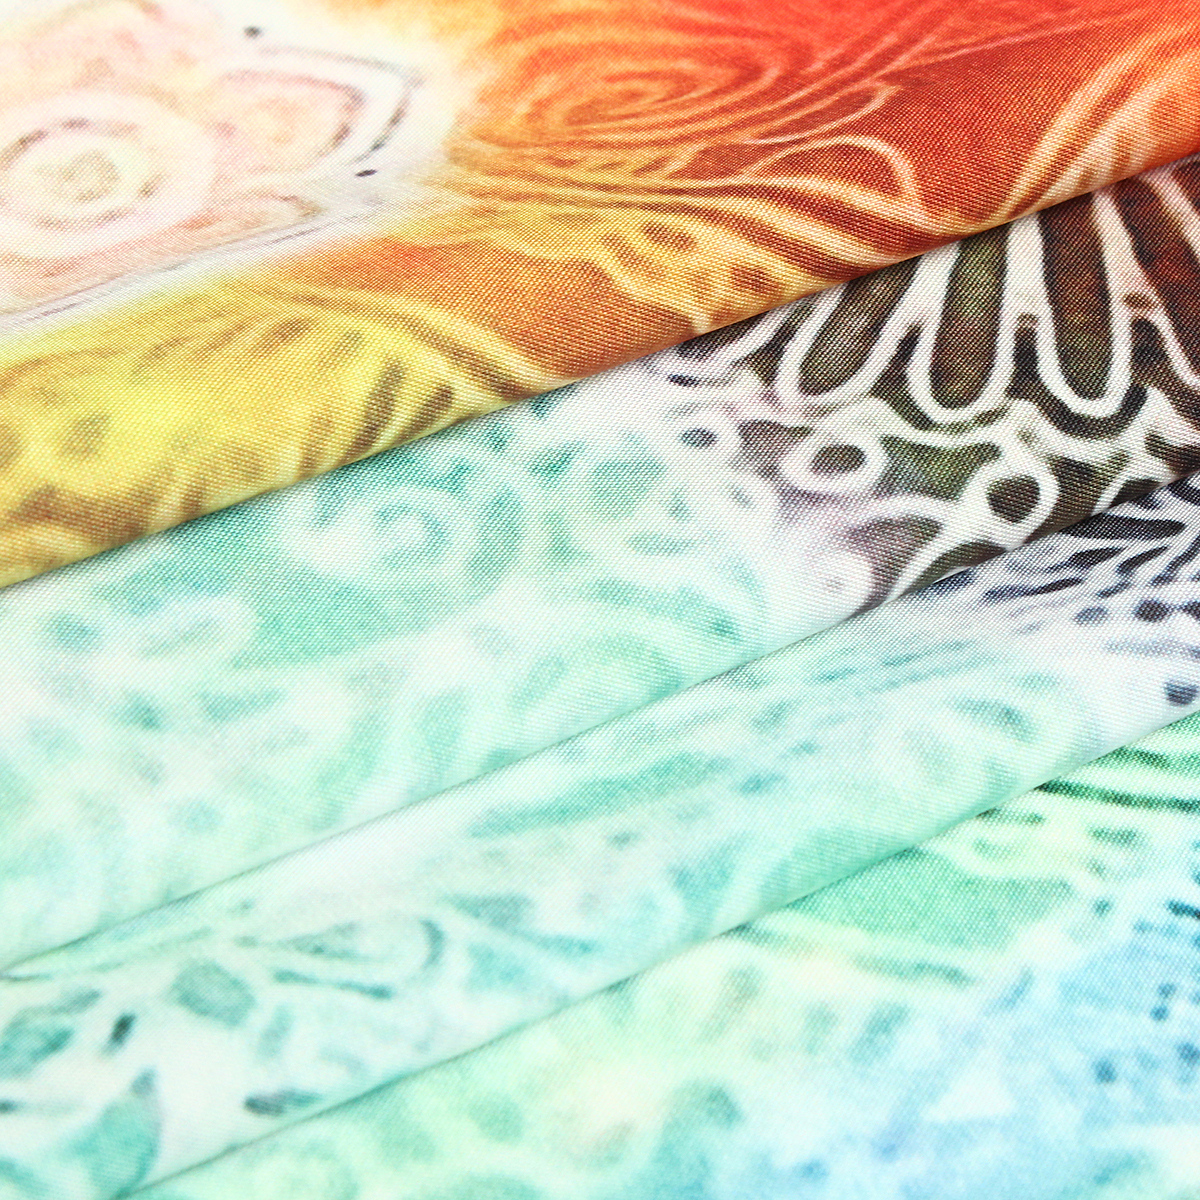 Tapestry-Hippie-Bedspread-Beach-Towel-Indian-Yoga-Mat-Wall-Hanging-Dorm-Decor-1120661-4